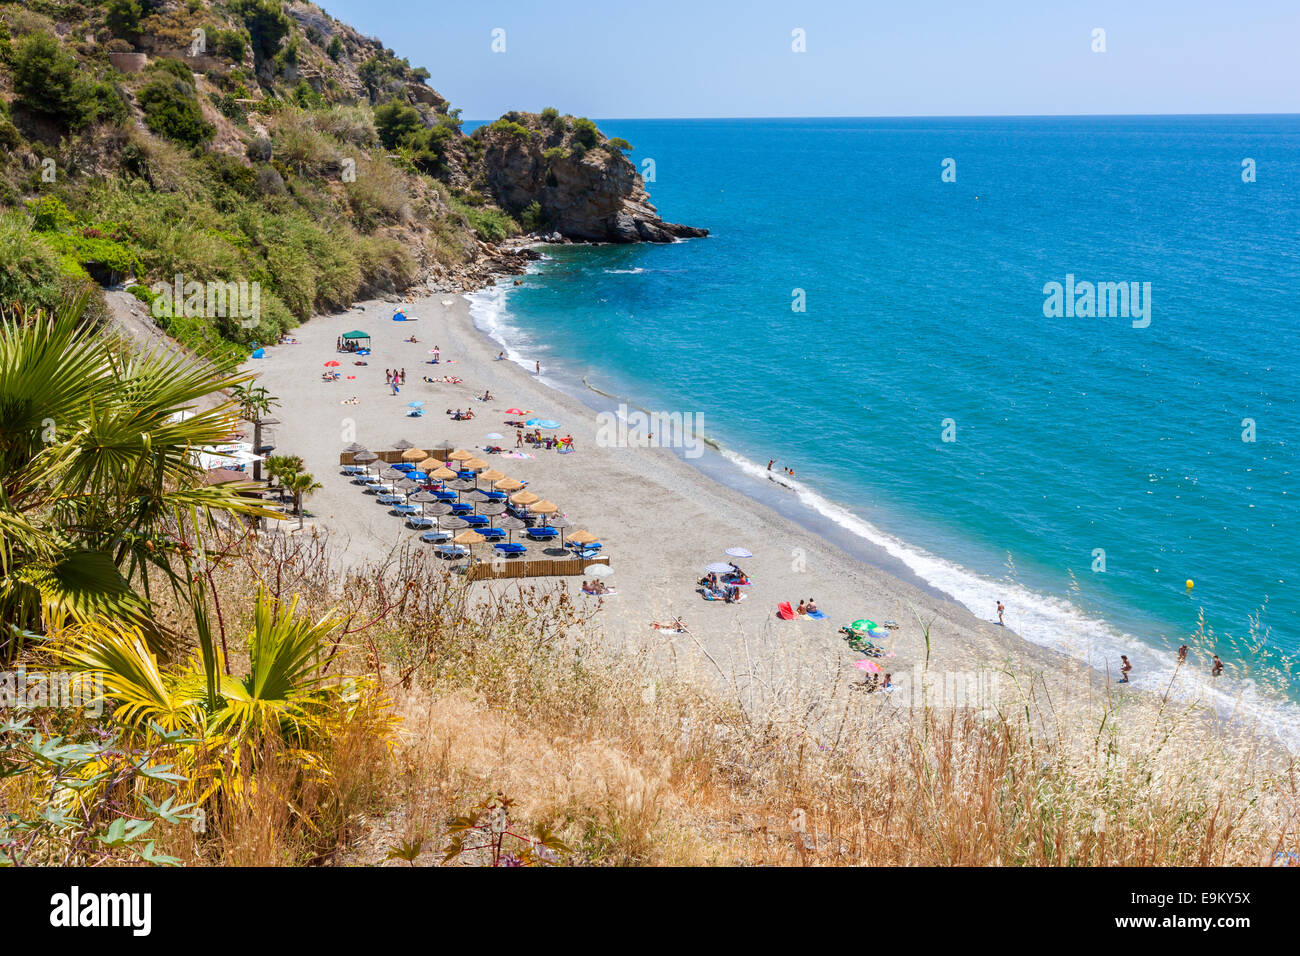 Playa de Maro, Axarquia, Costa del Sol, Malaga province, Andalusia, Spain, Europe. Stock Photo